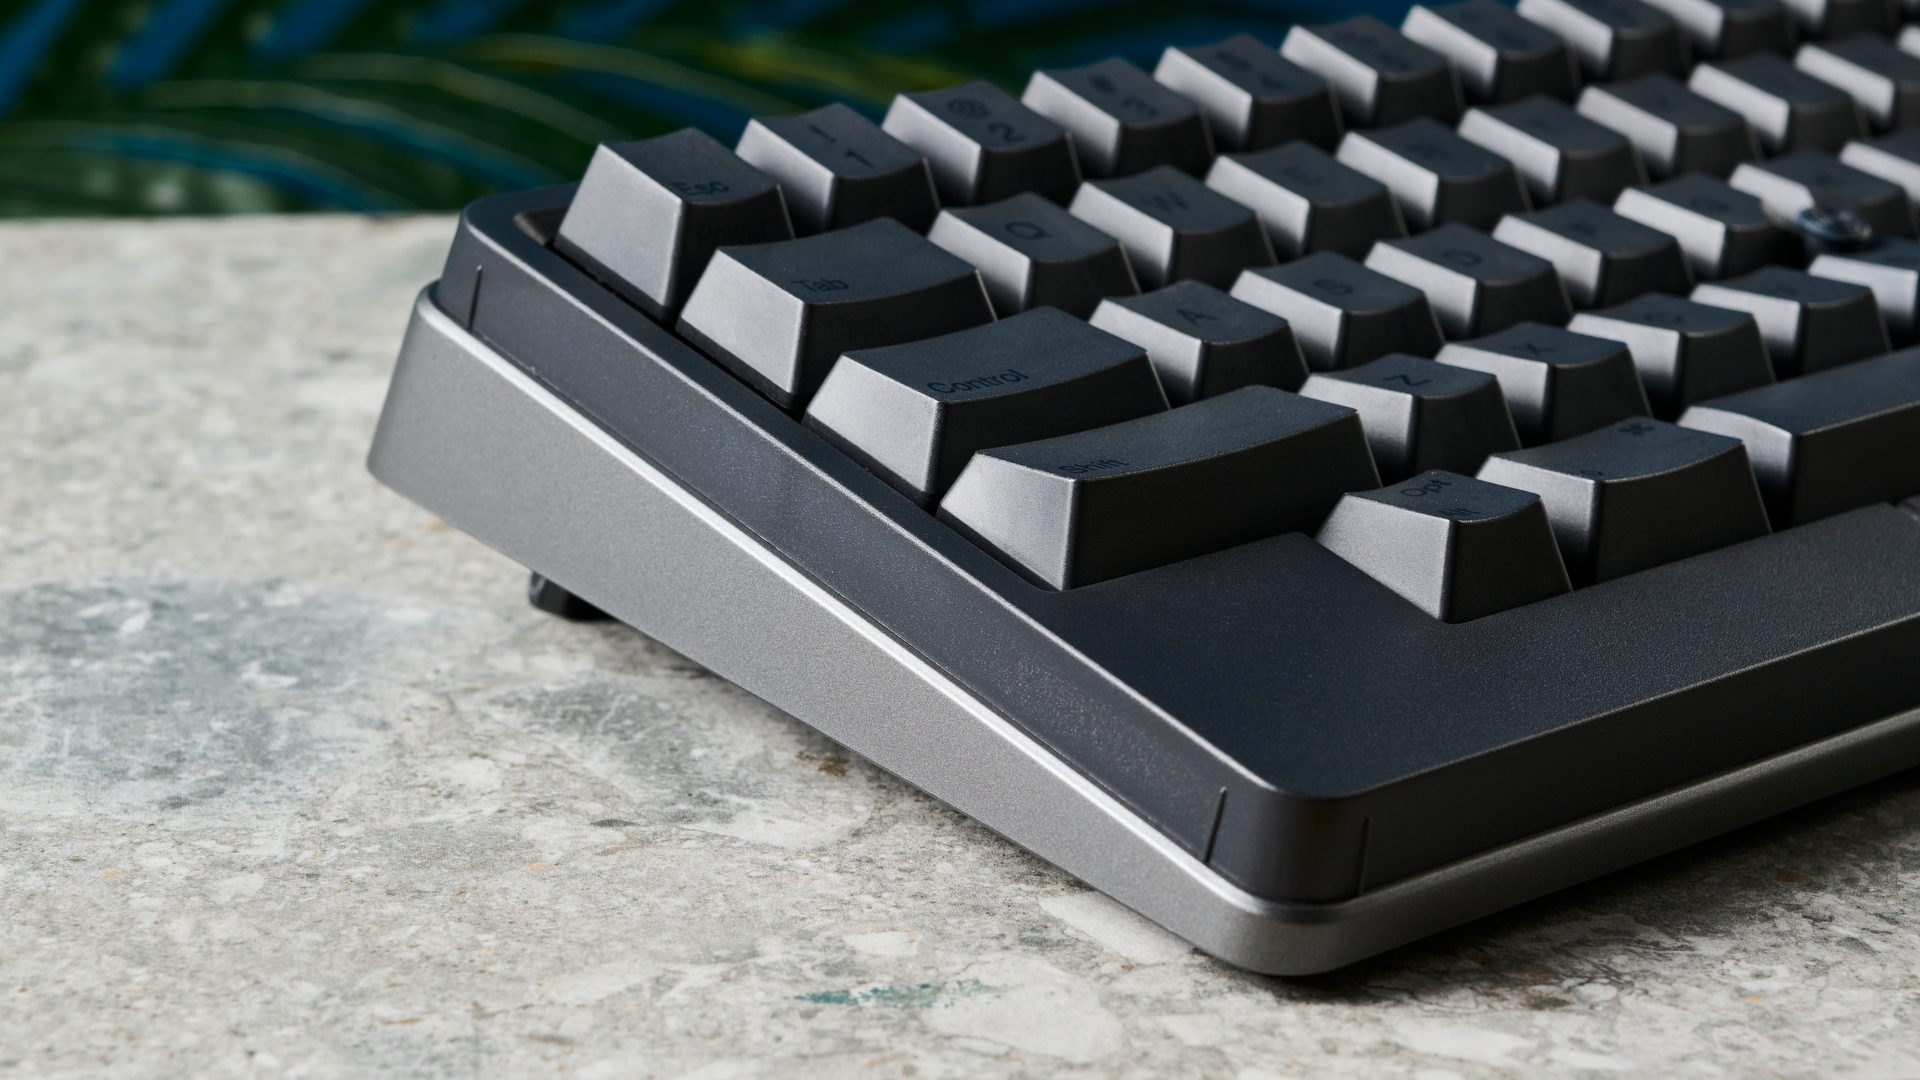 A photo of the HHKB Studio mechanical keyboard on a stone surface